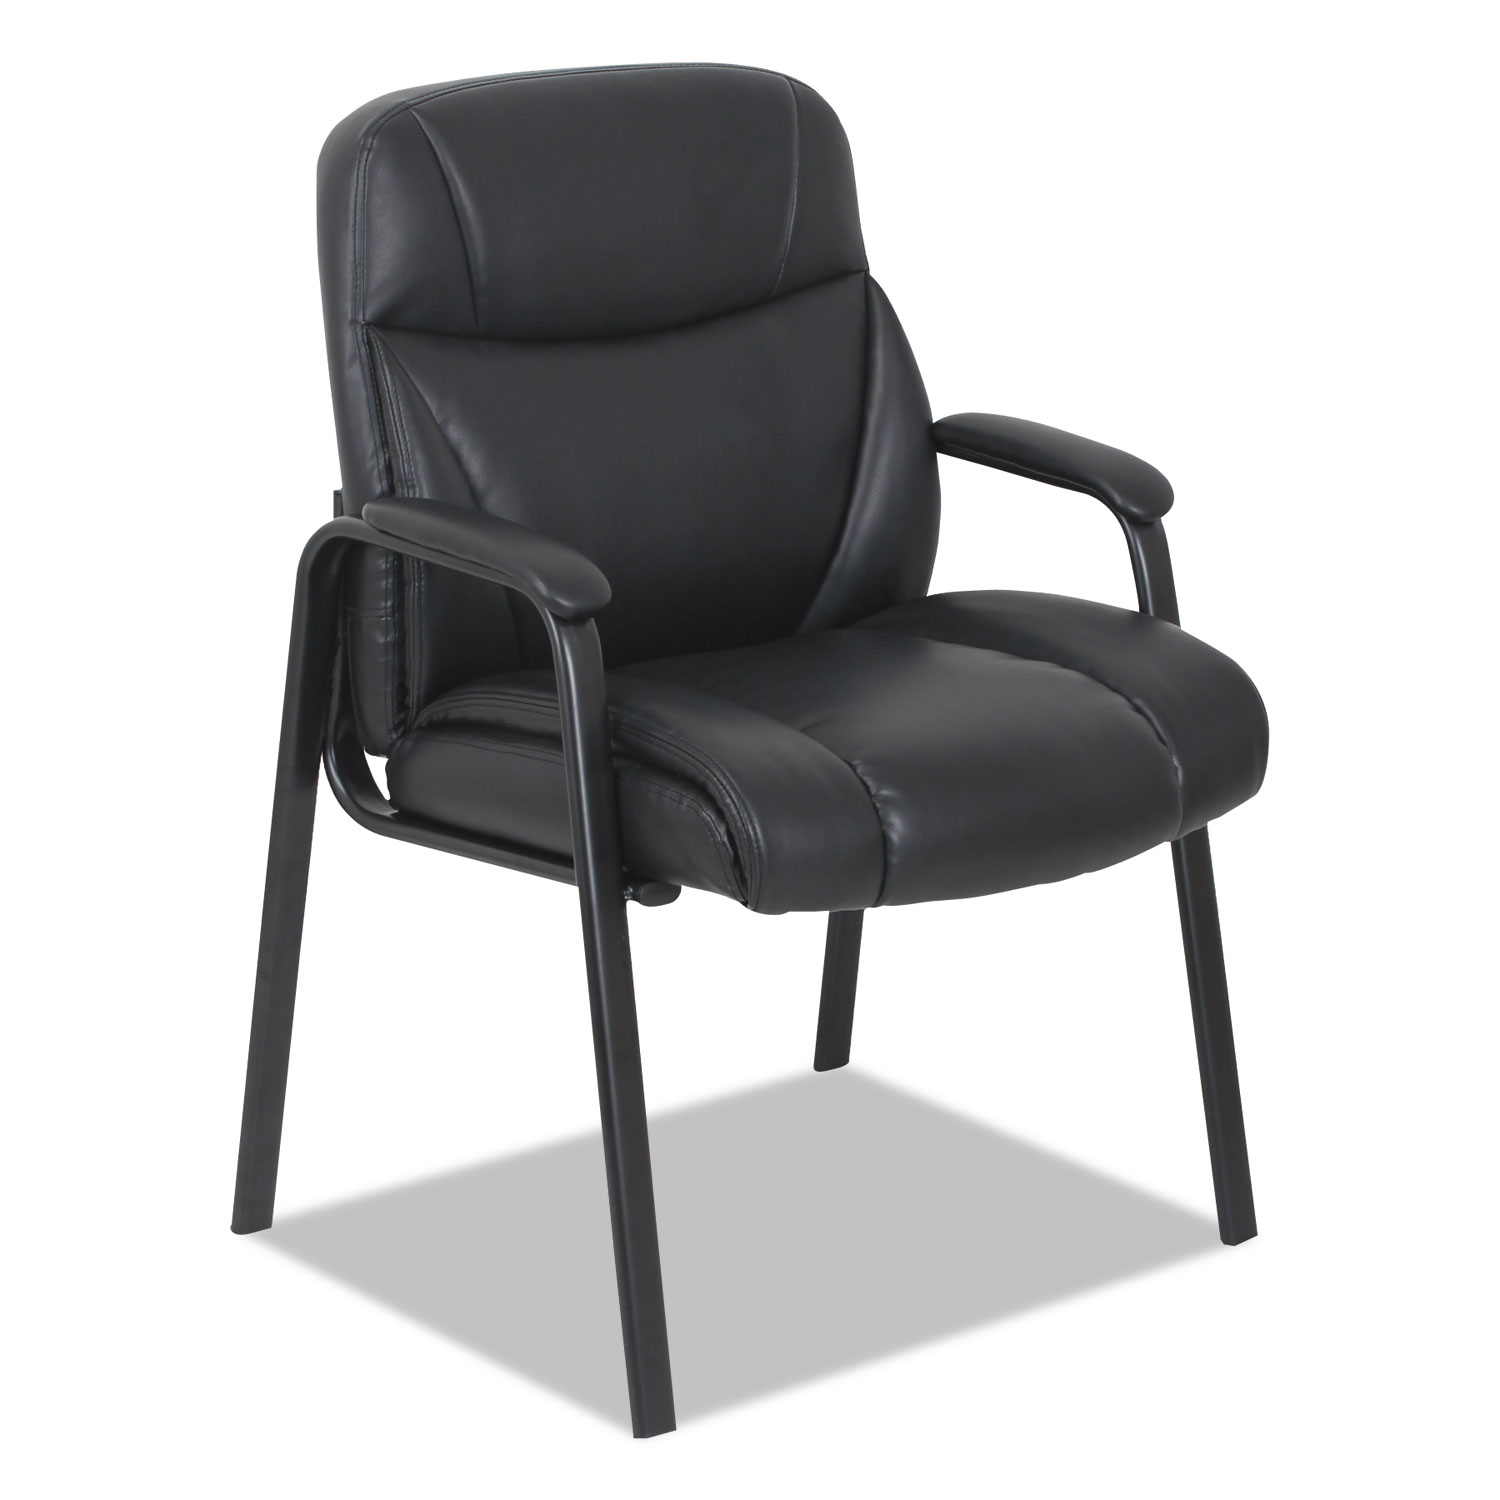  Alera ALEVN4319 Leather Guest Chair, 25.63 x 26 x 37.63, Black Seat/Black Back, Black Base (ALEVN4319) 